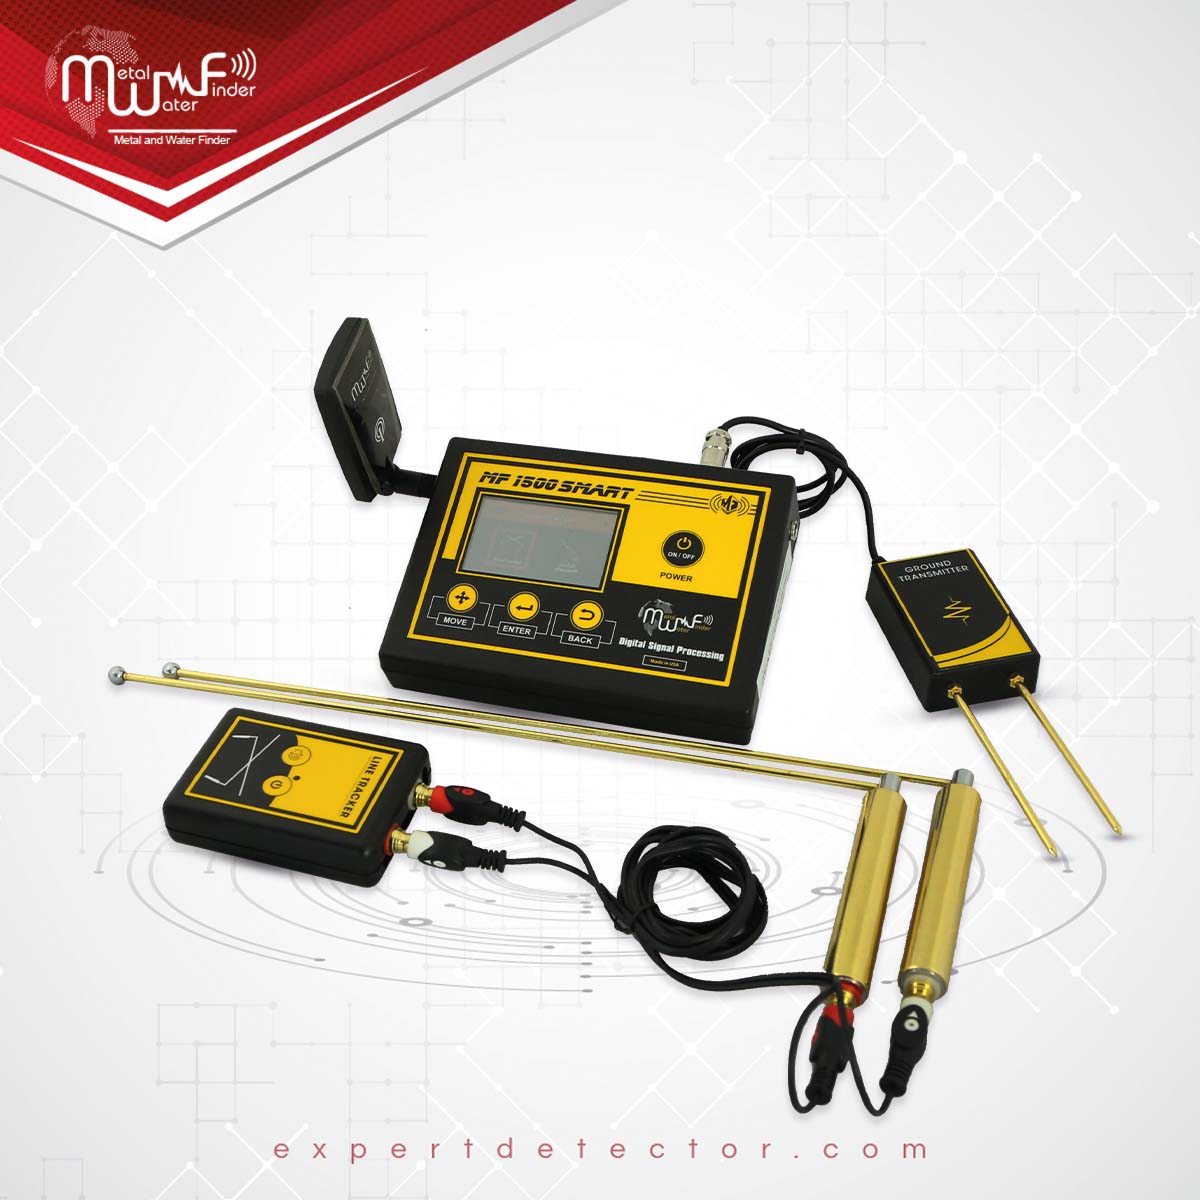 MF 1500 Smart gold detector